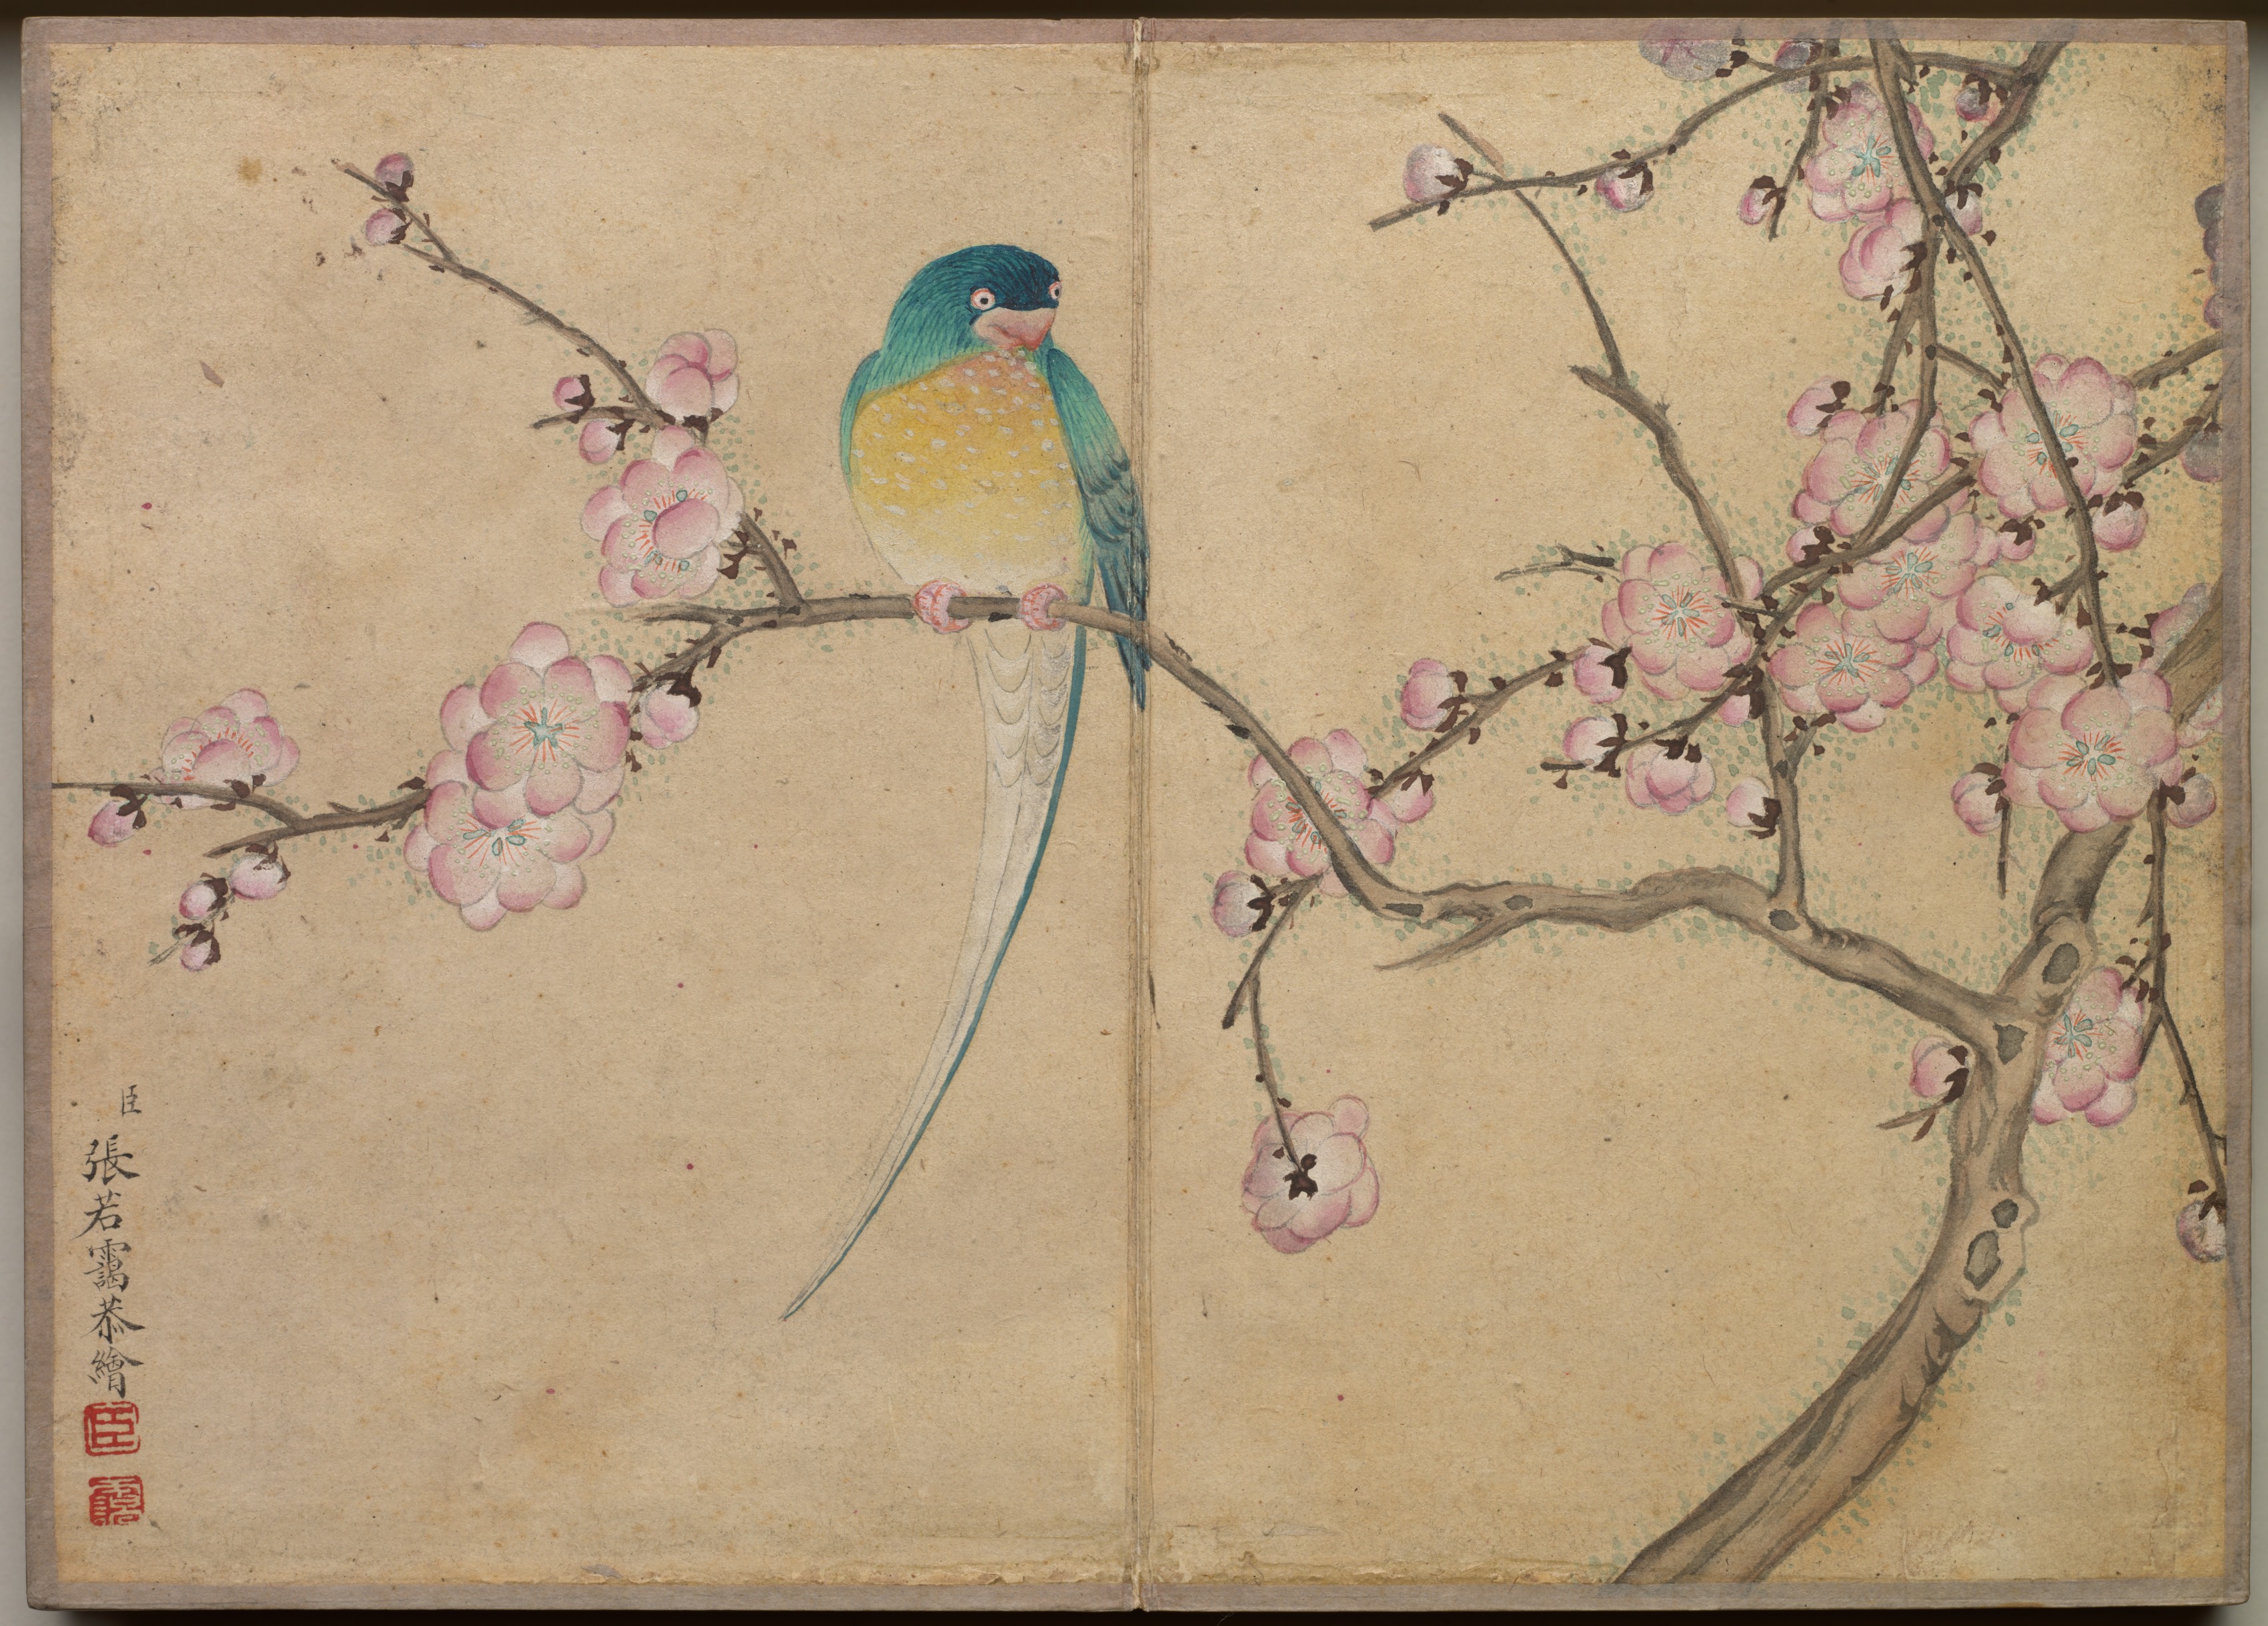 Desk Album: Flower and Bird Paintings (Bird with Plum Blossoms)